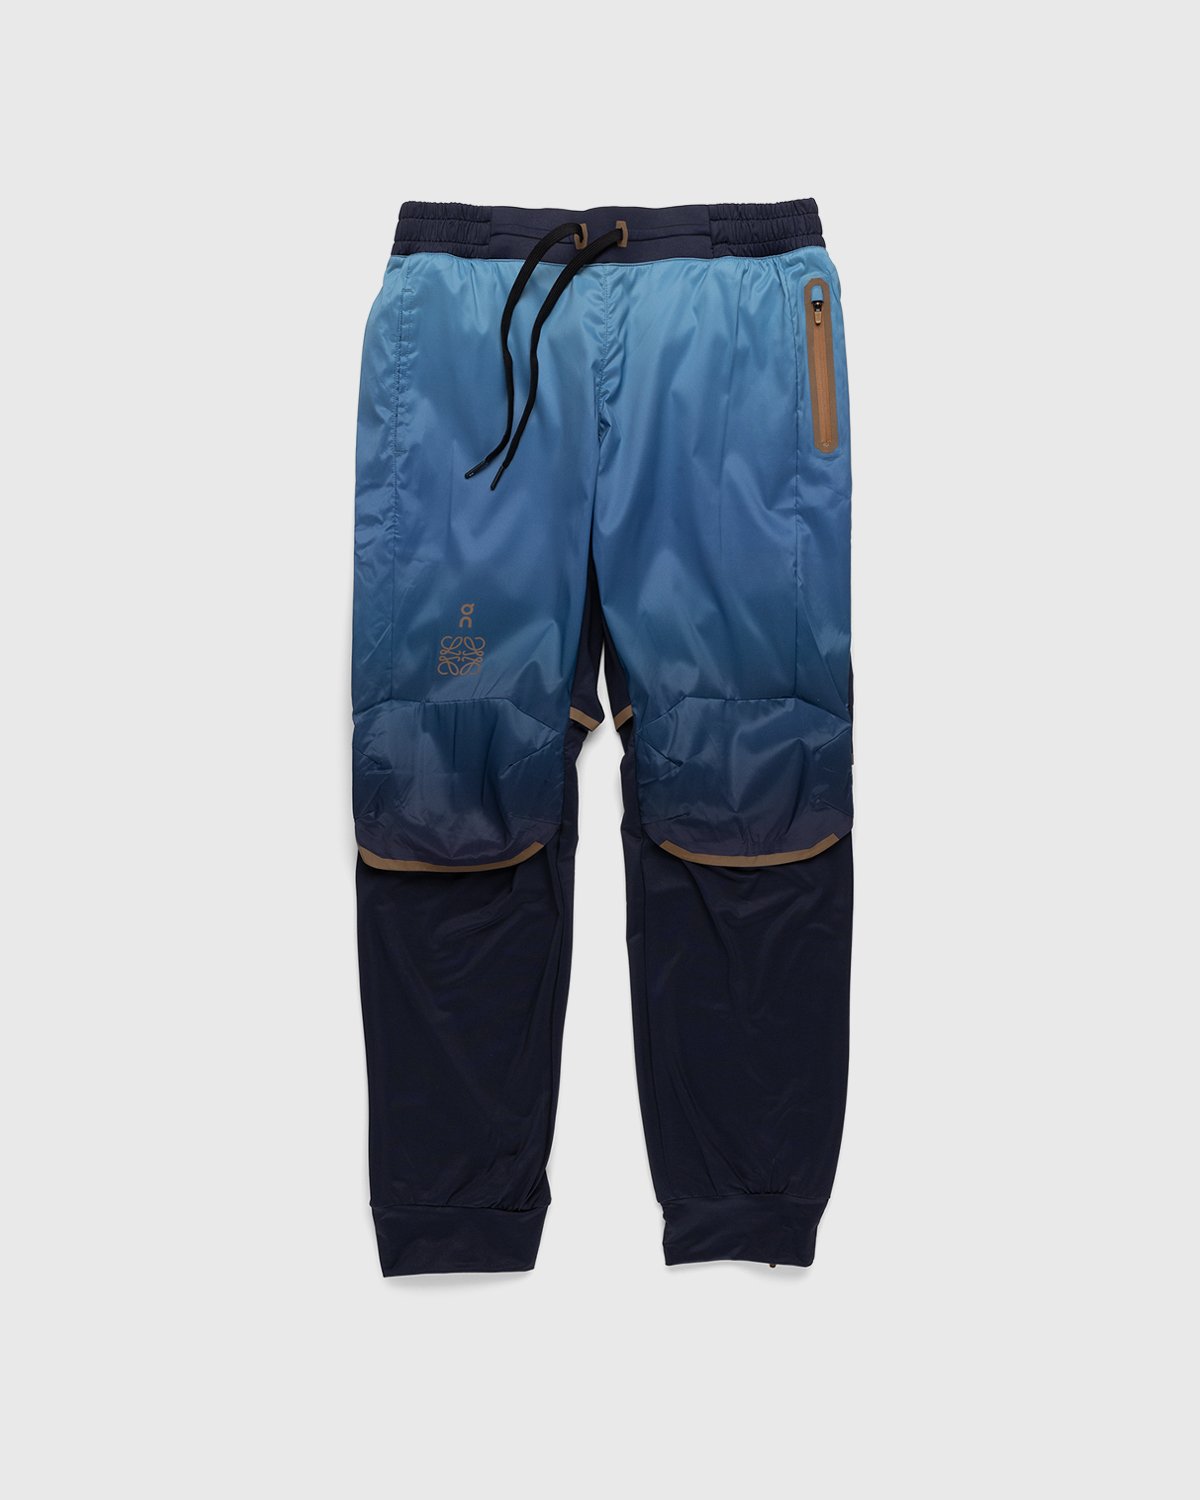 Loewe x On - Women's Technical Running Pants Gradient Blue - Clothing - Blue - Image 1